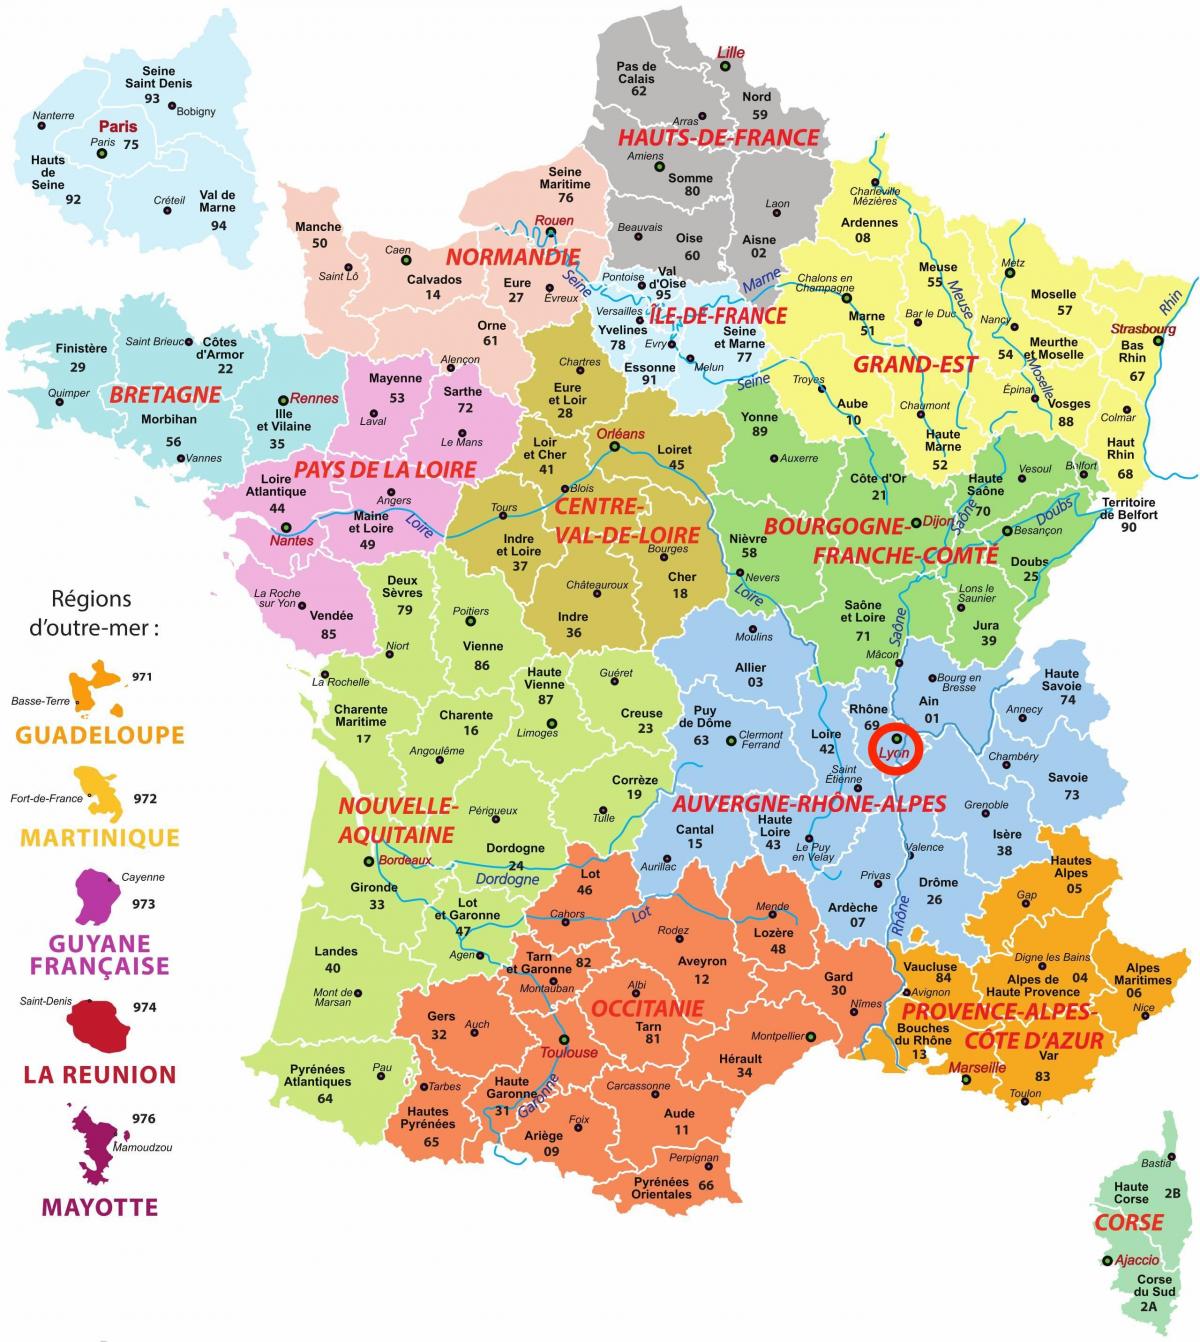 Lyon op de kaart van Auvergne-Rhône-Alpes - Frankrijk